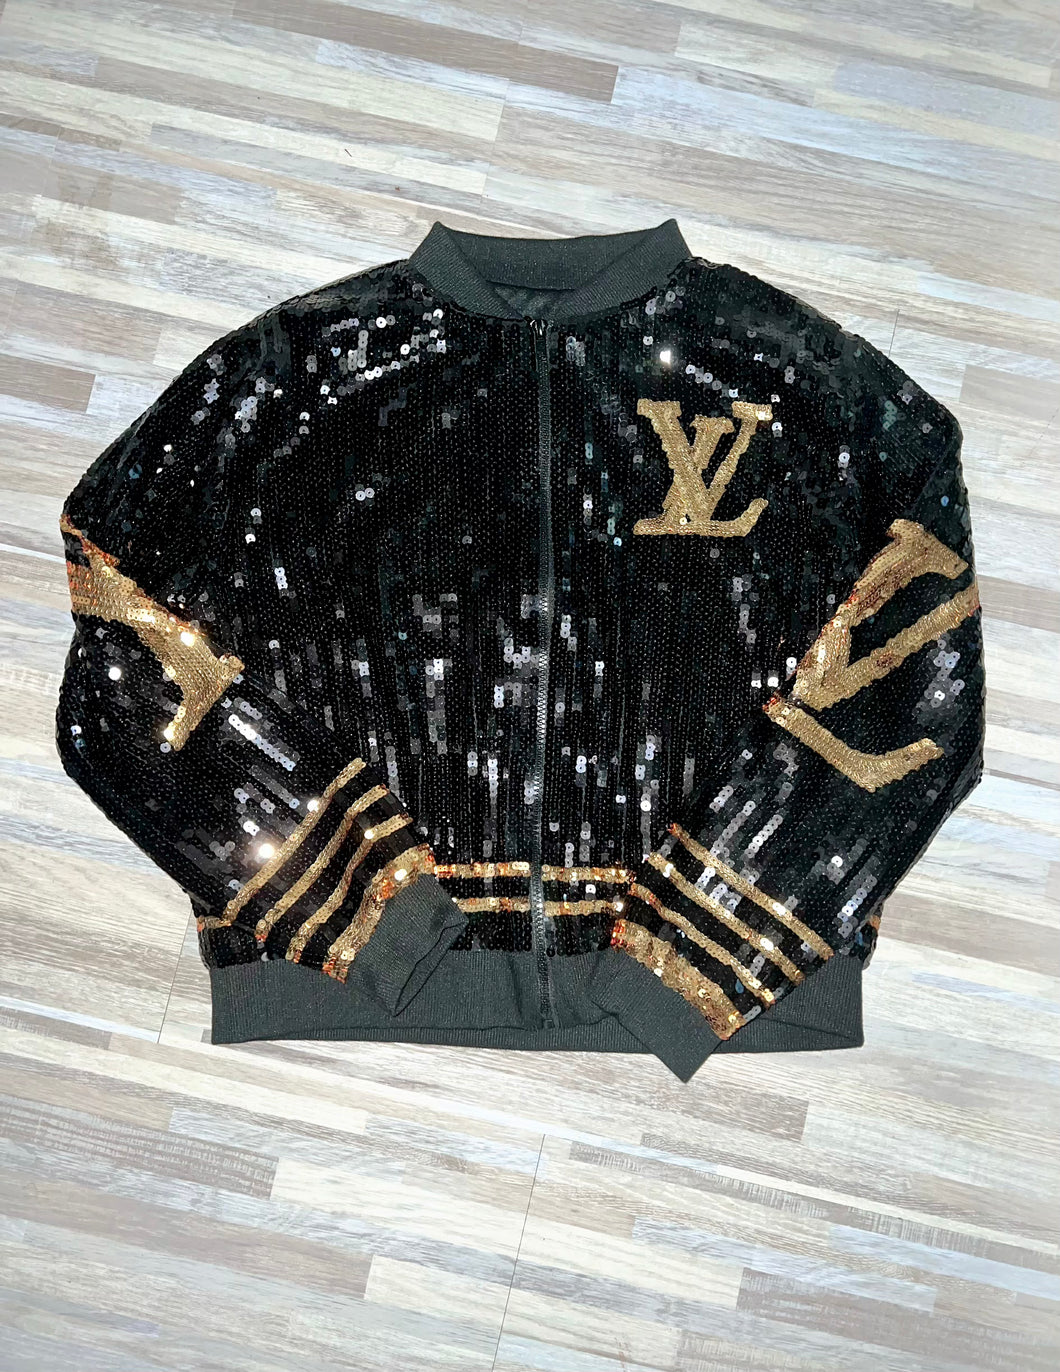 LV Inspired Jacket